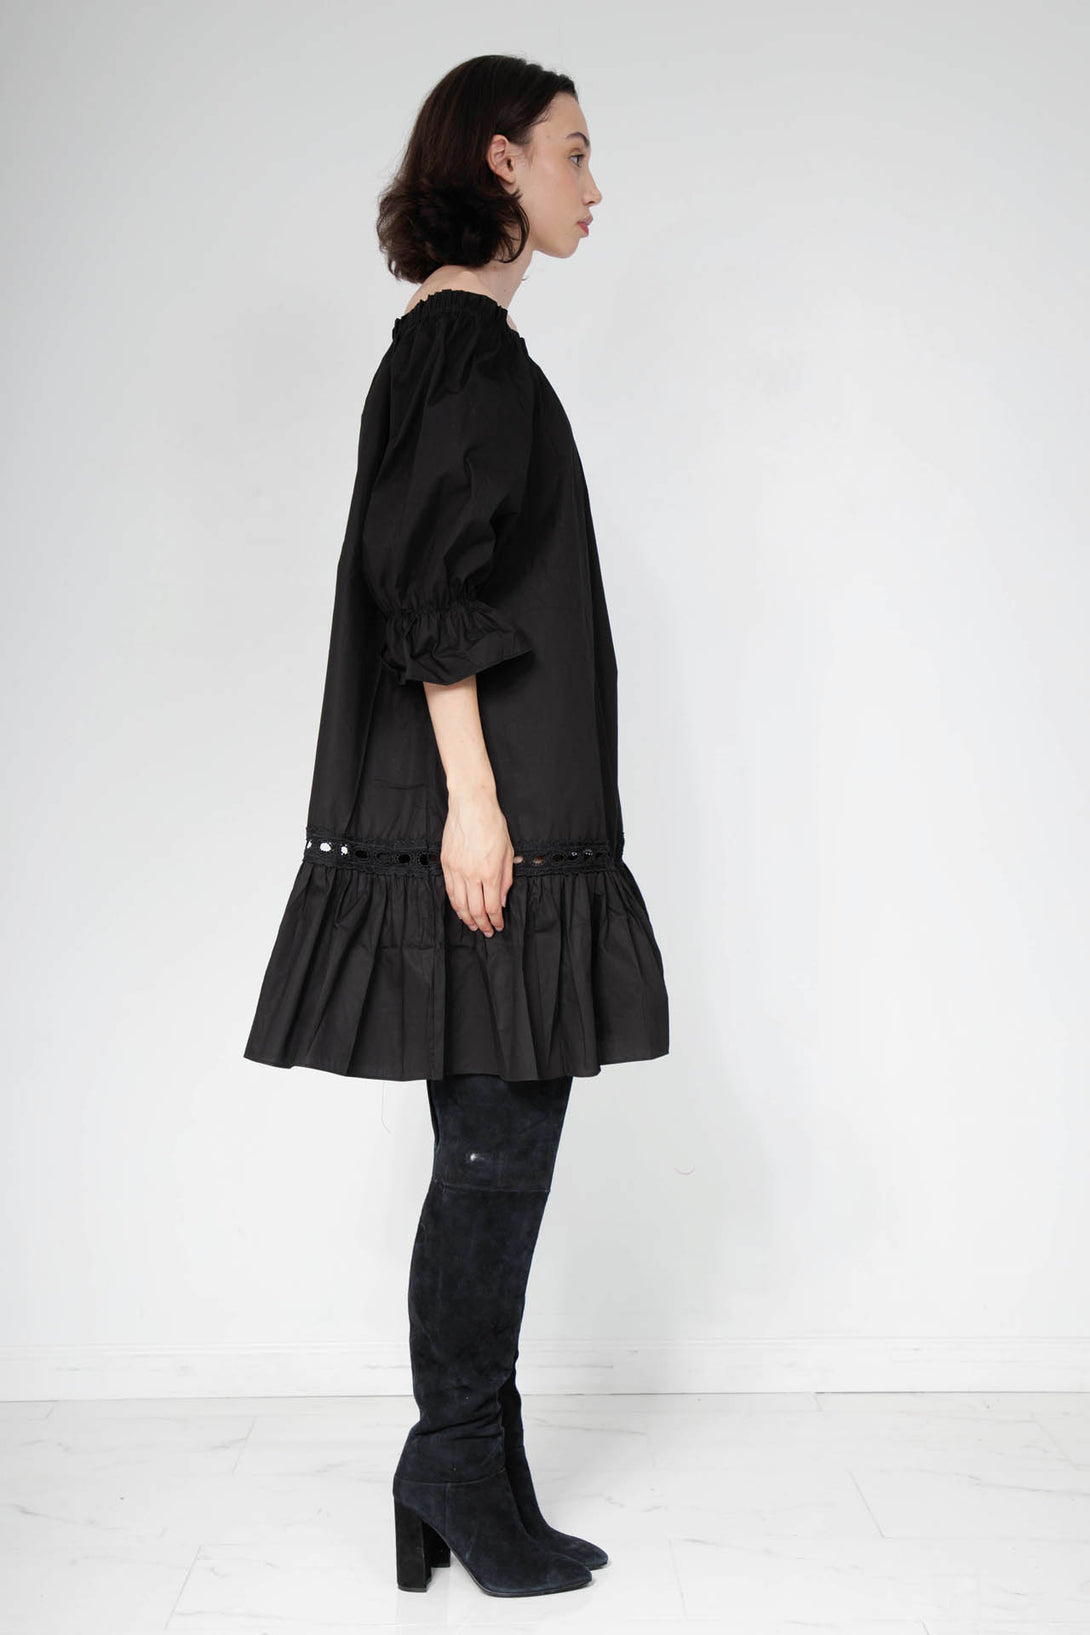 midi black dress formal, mid length formal dress, medium length black dress, HT 360 Collective, off the shoulder dress with sleeves,